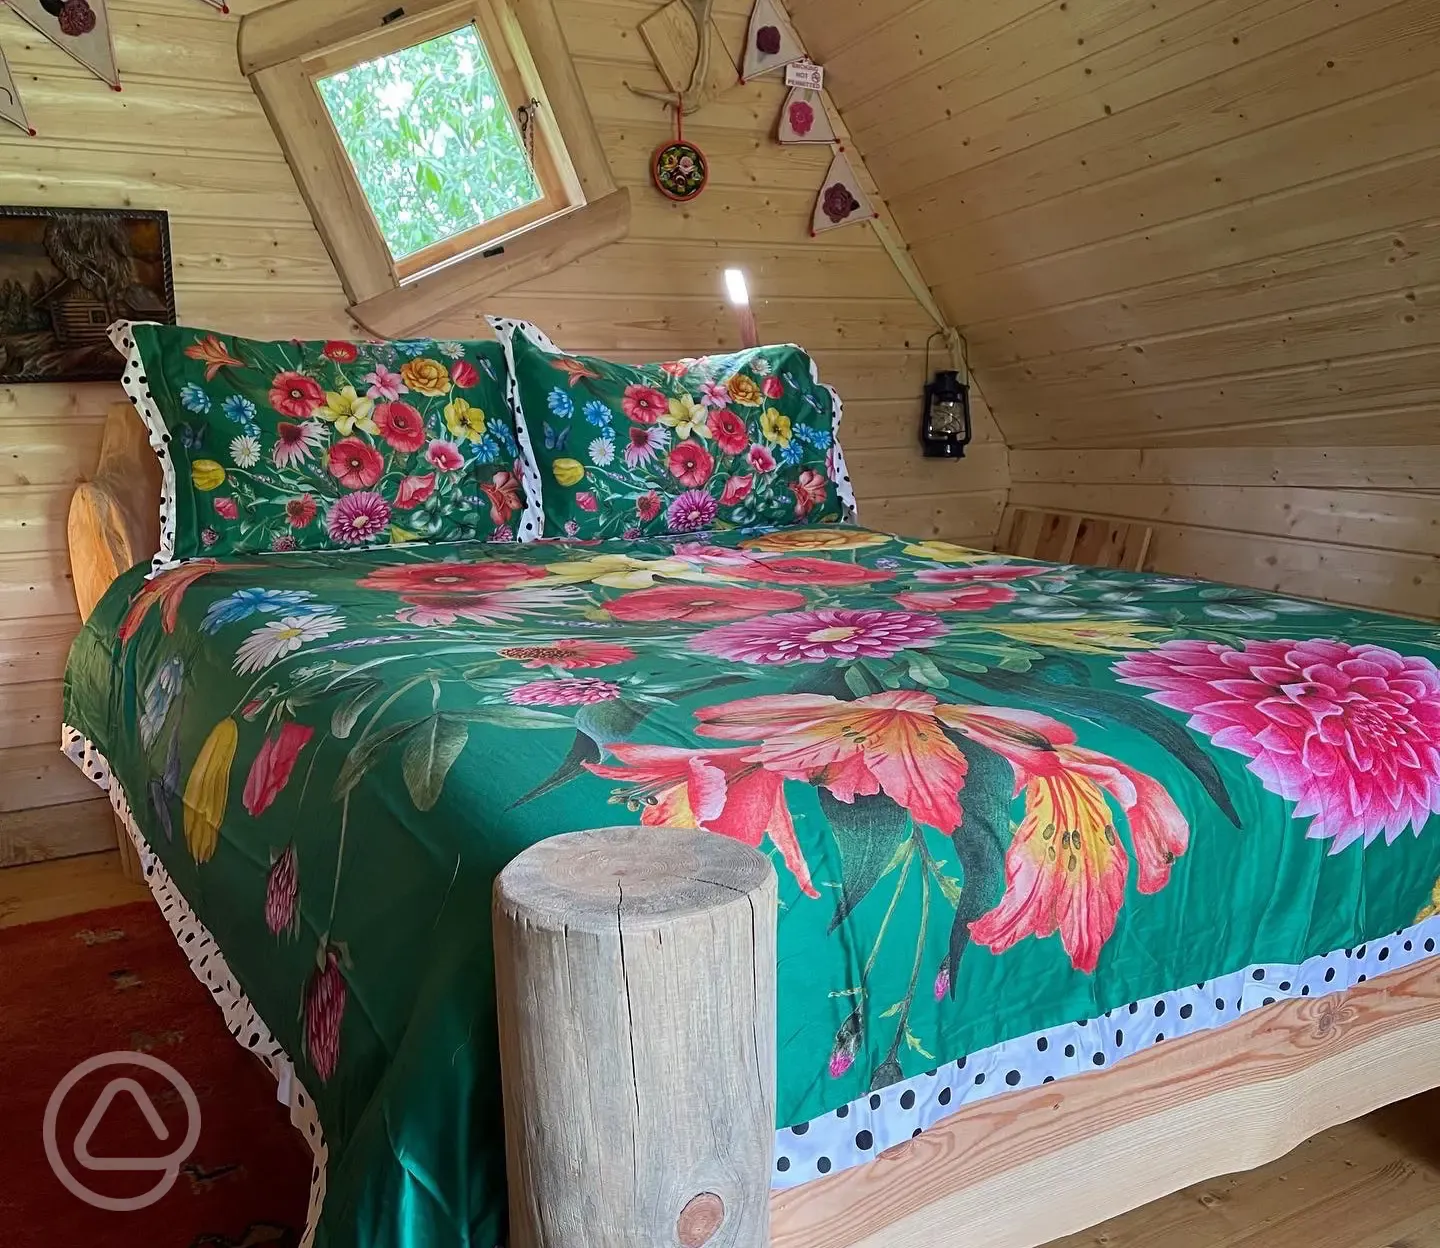 Rose Hollow Log Cabin interior